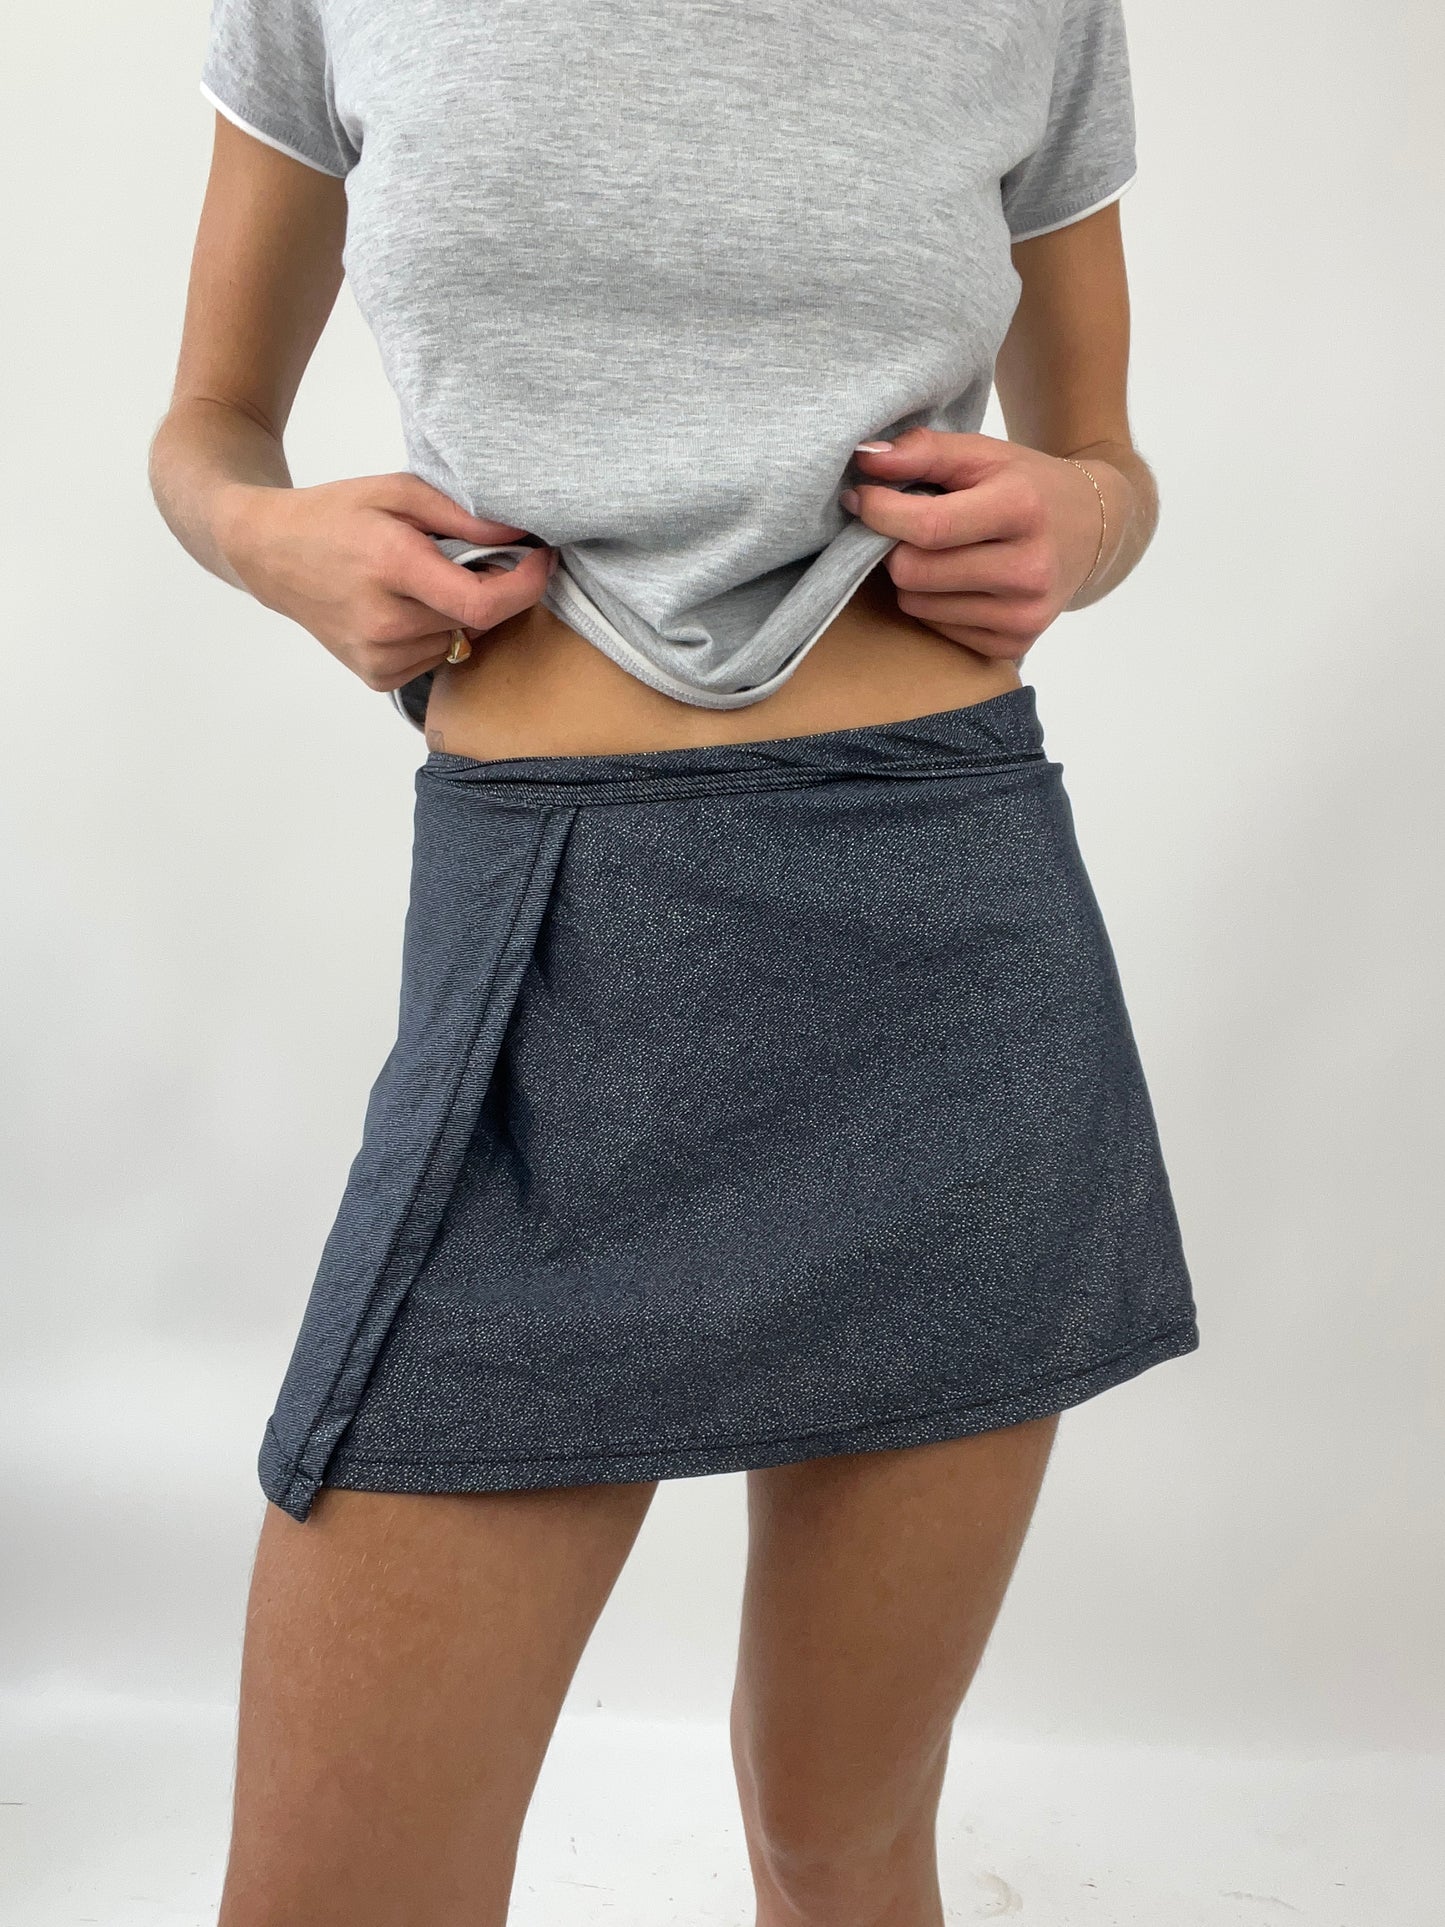 EUROS DROP | medium grey wrap skirt with glitter